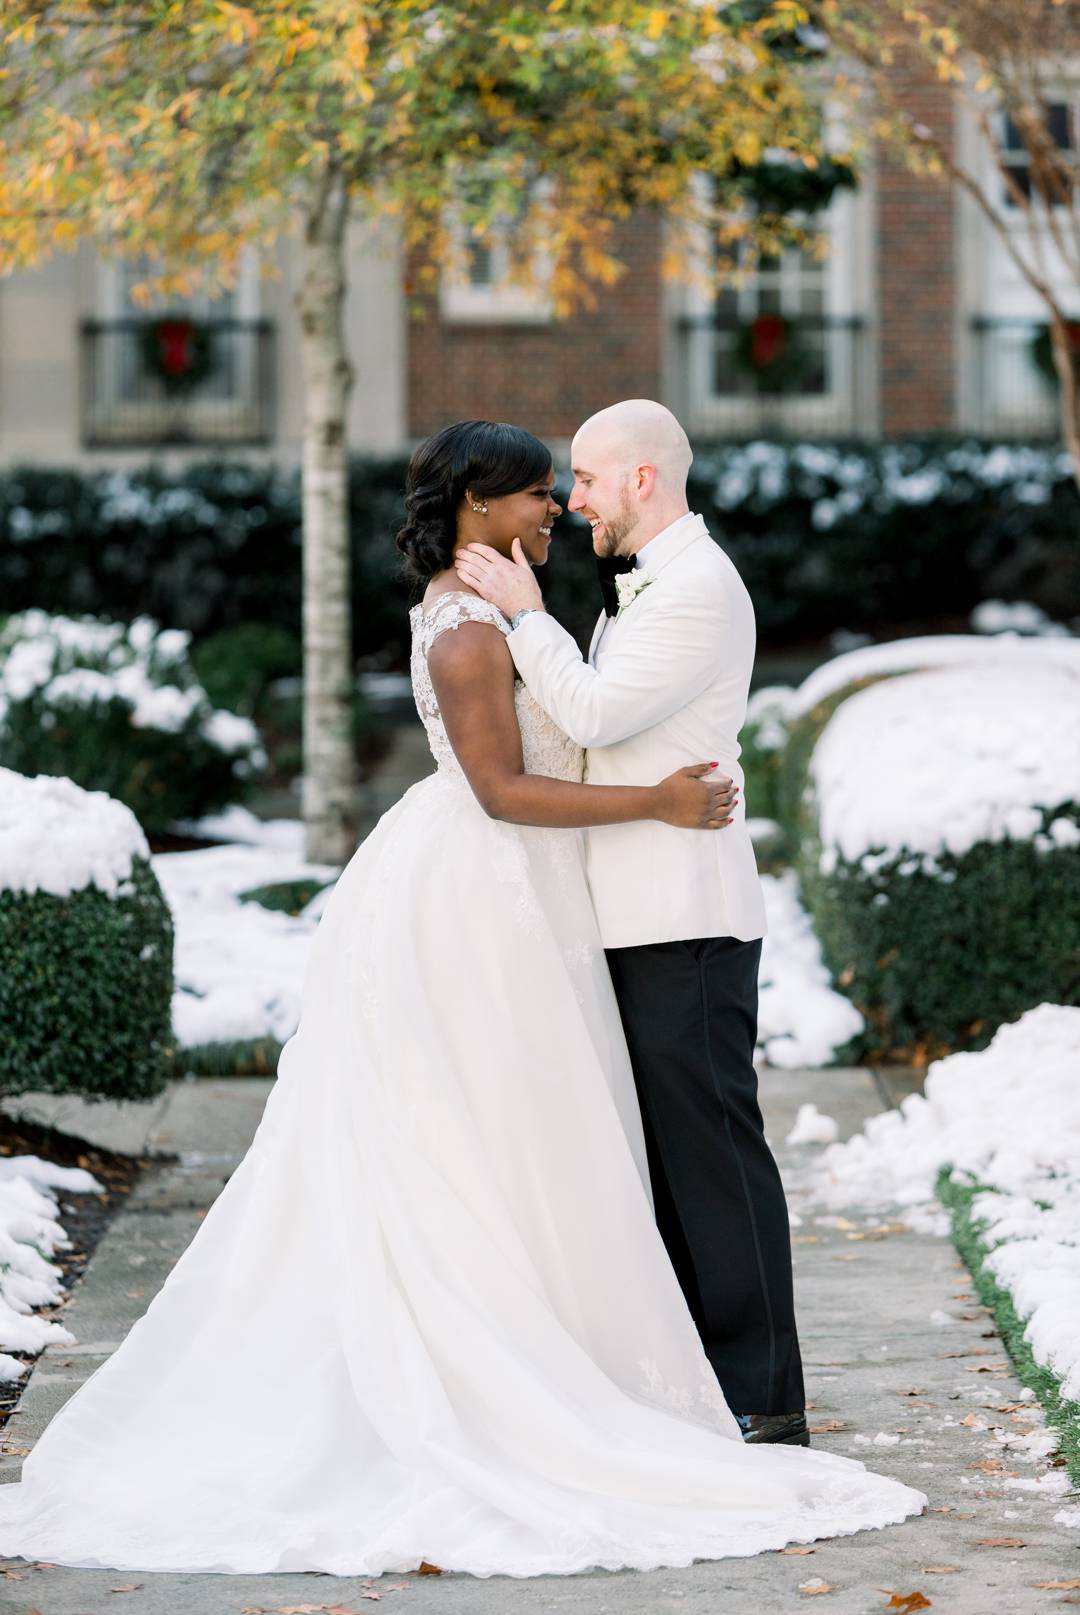 A Winter Wonderland Wedding at the Biltmore Ballrooms in Atlanta, GA by Leigh Wolfe Photography